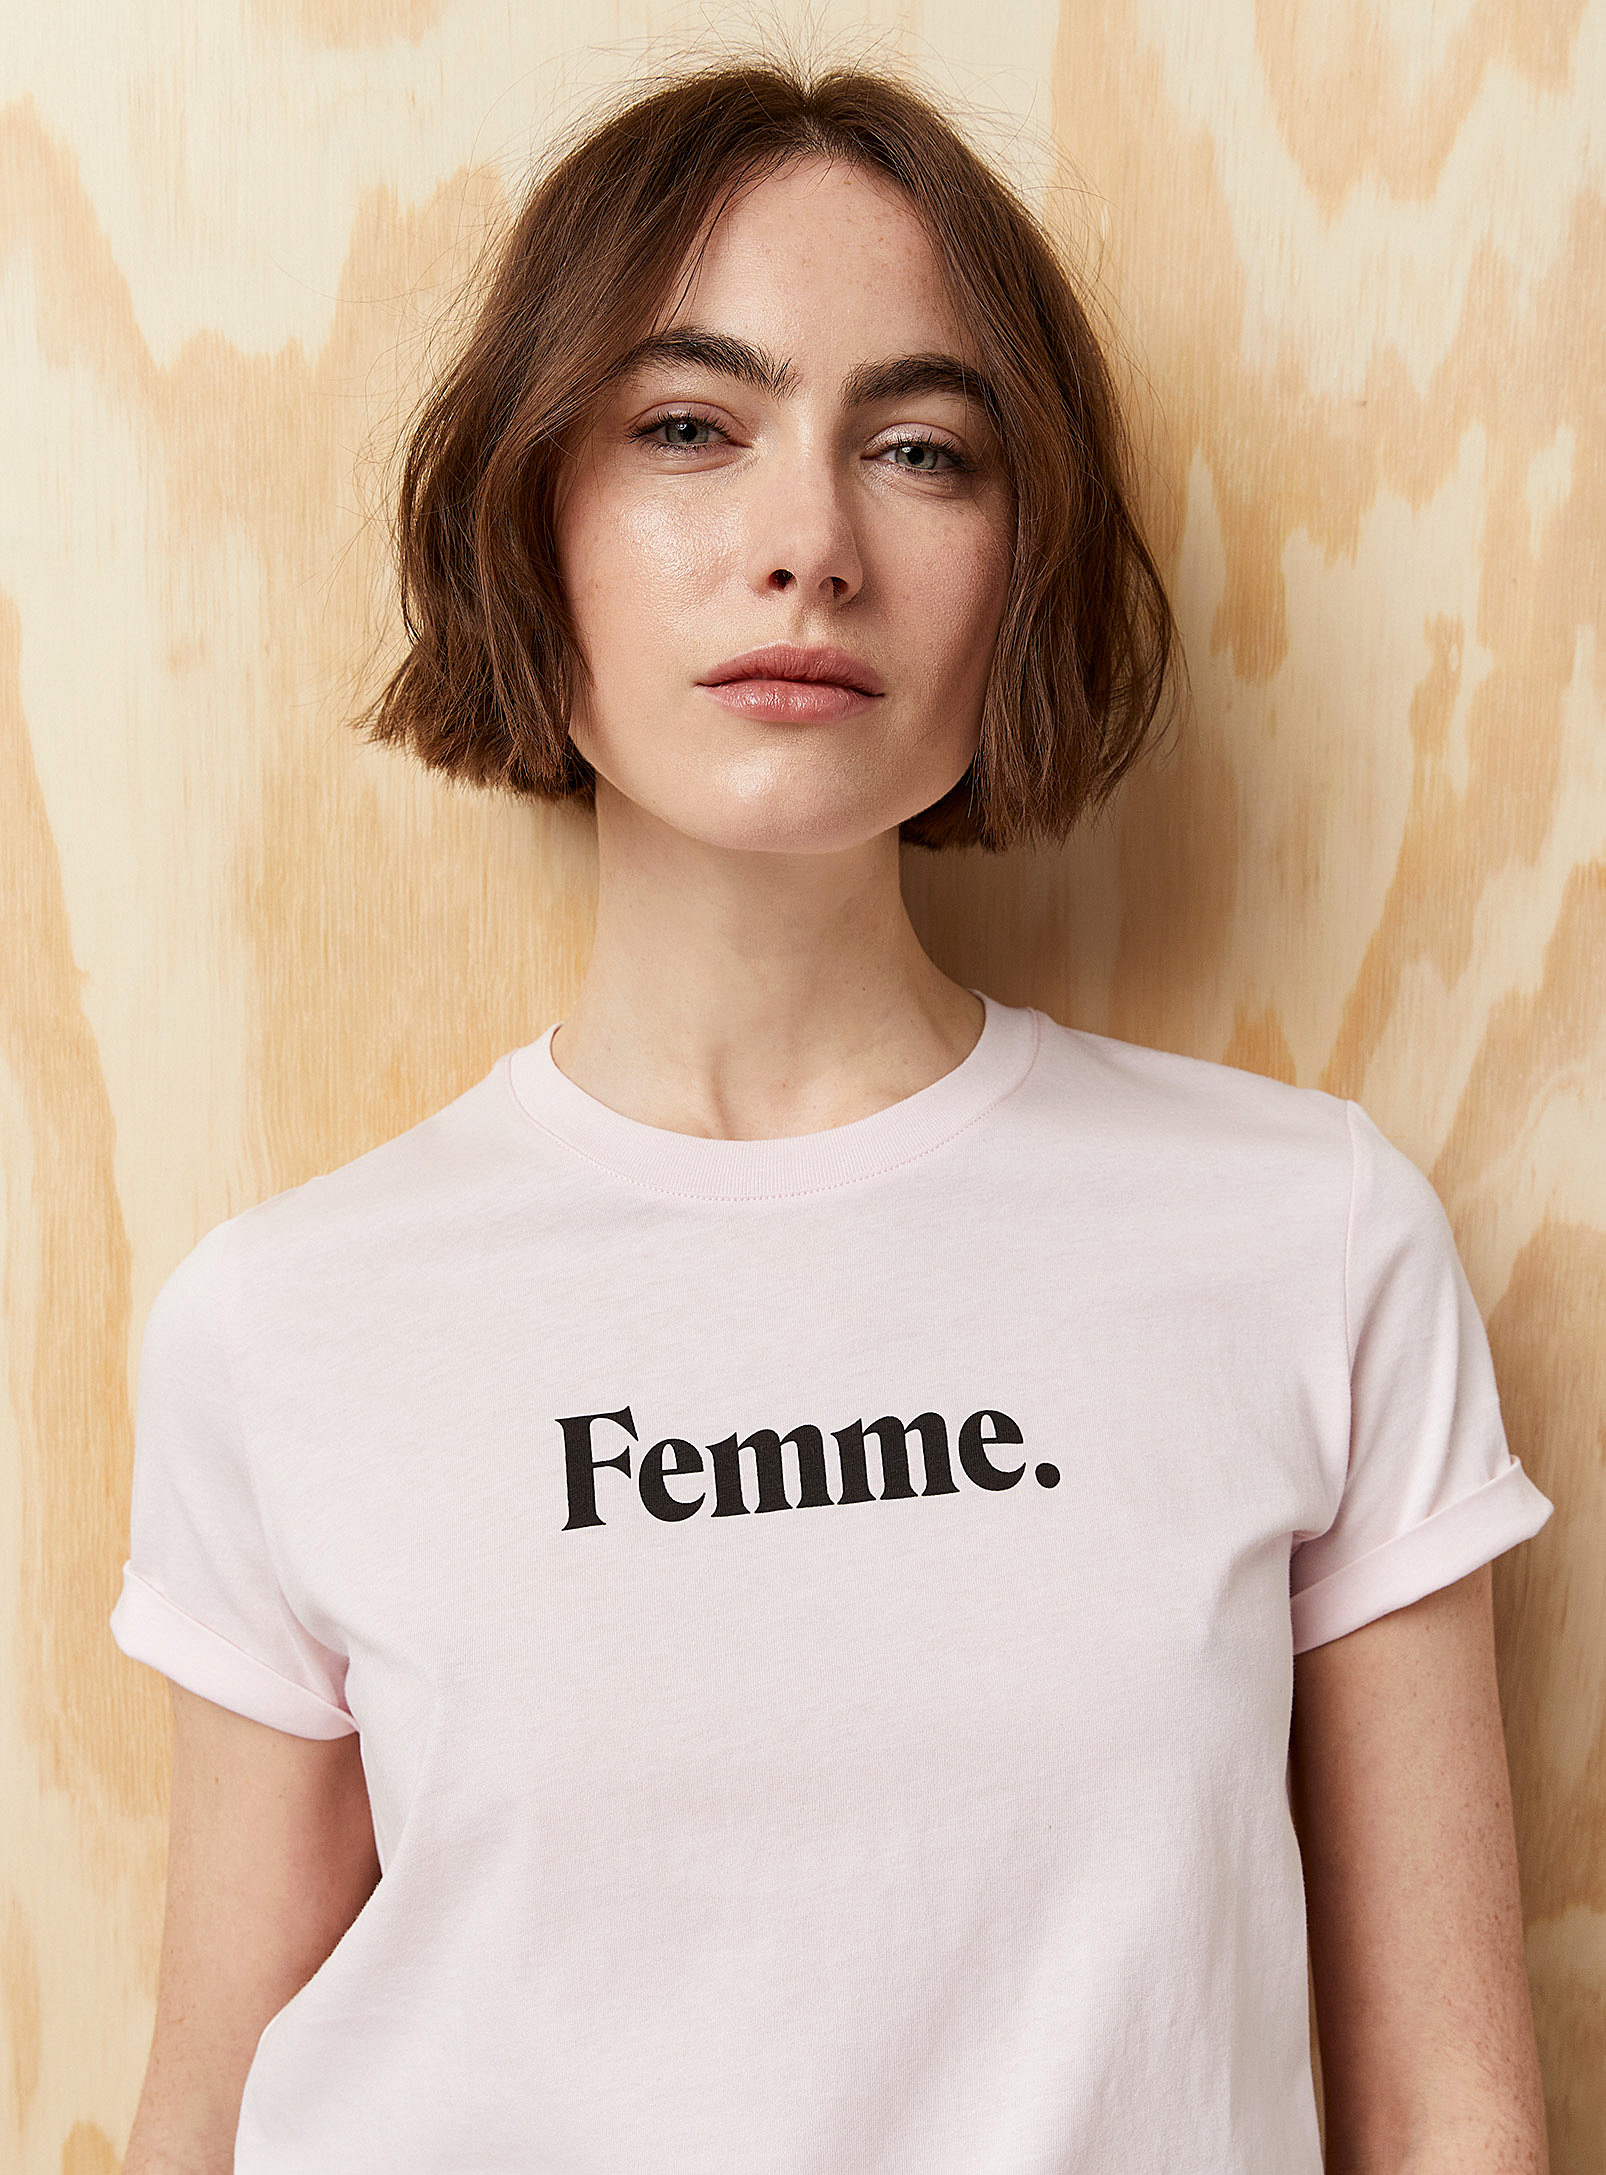 Contemporaine - Women's Tribute to women T-shirt